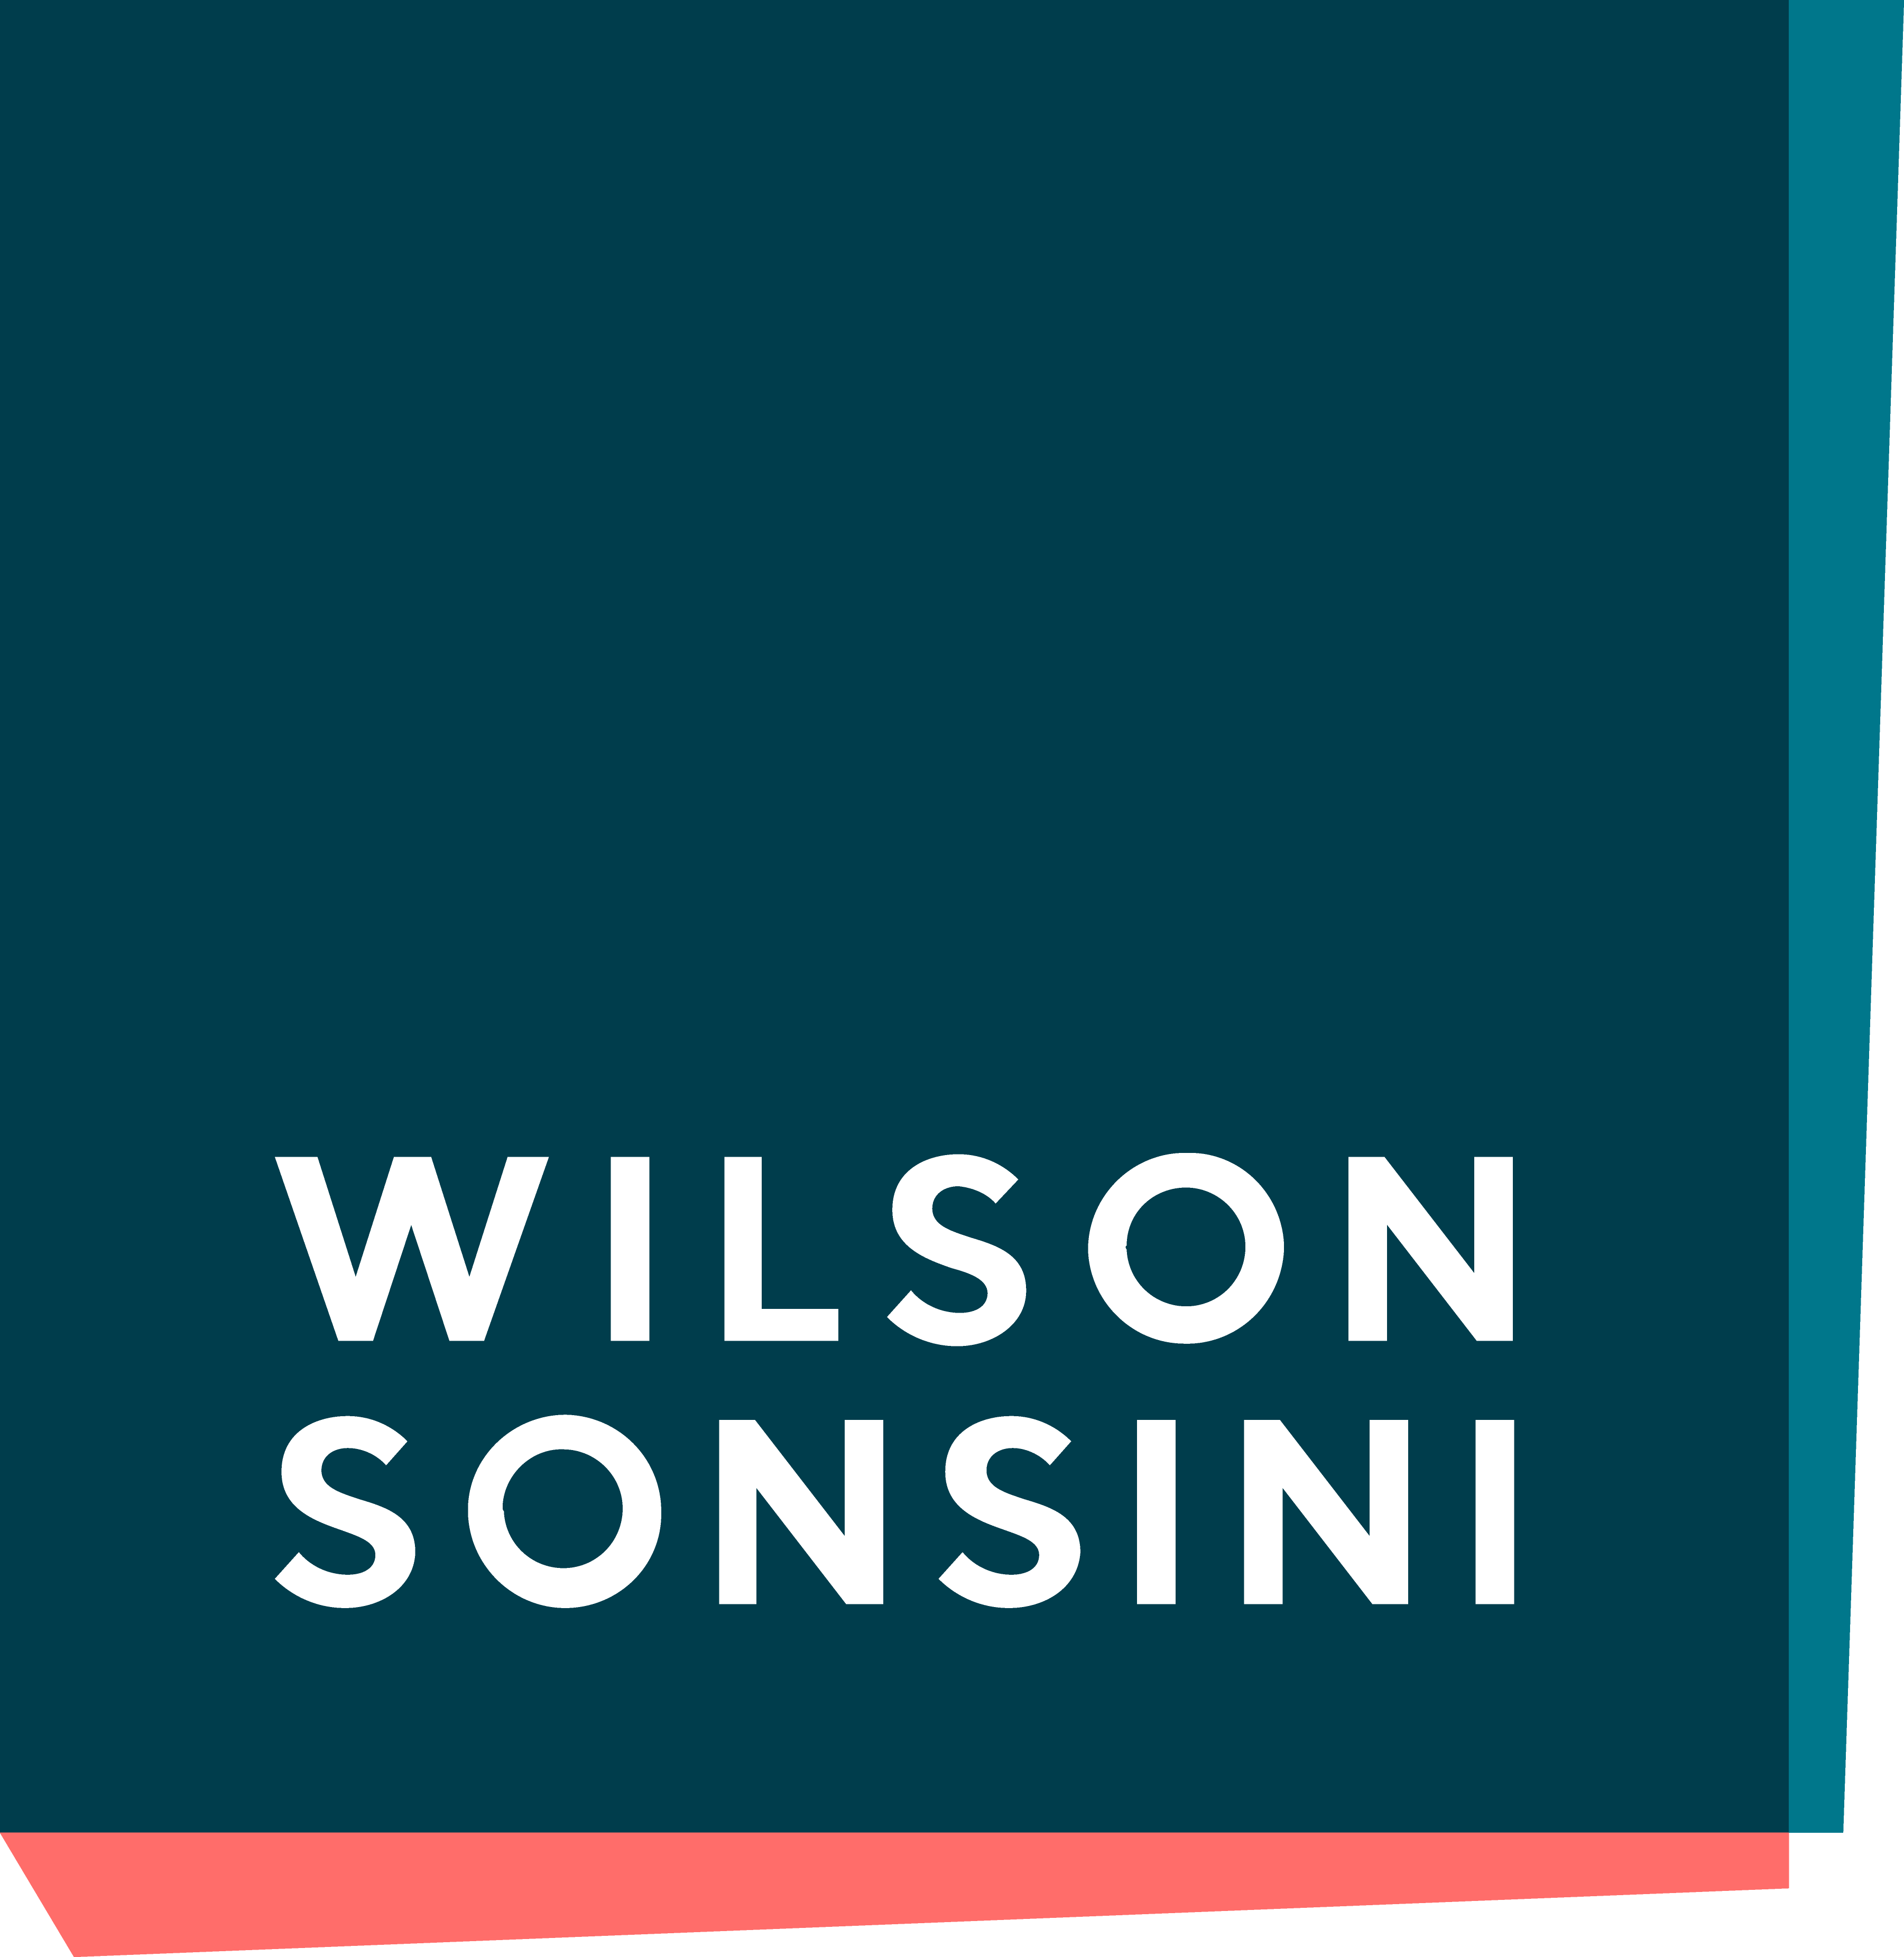 Wilson Sonsini Foundation Logo